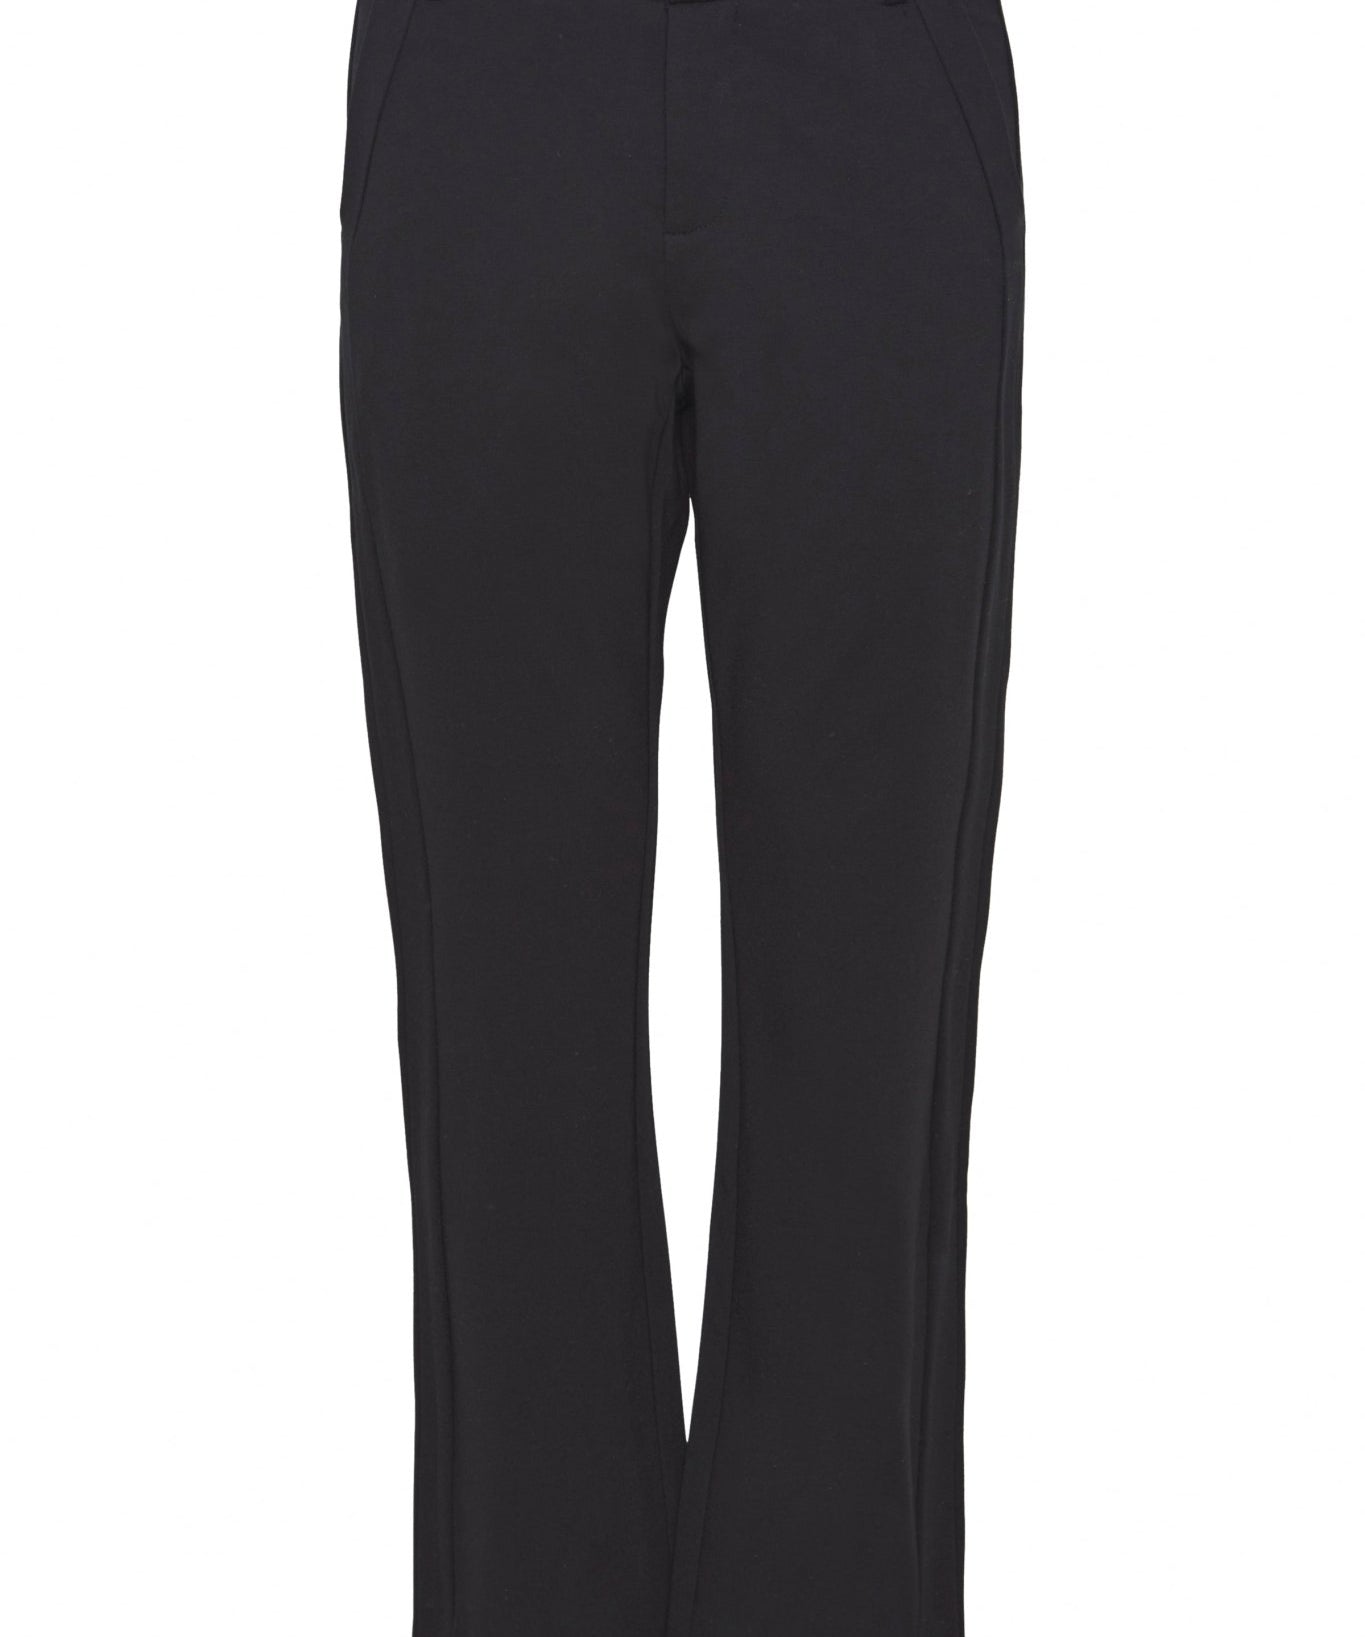 Tessa dress pants by Fransa - black - Blue Sky Fashions & Lingerie